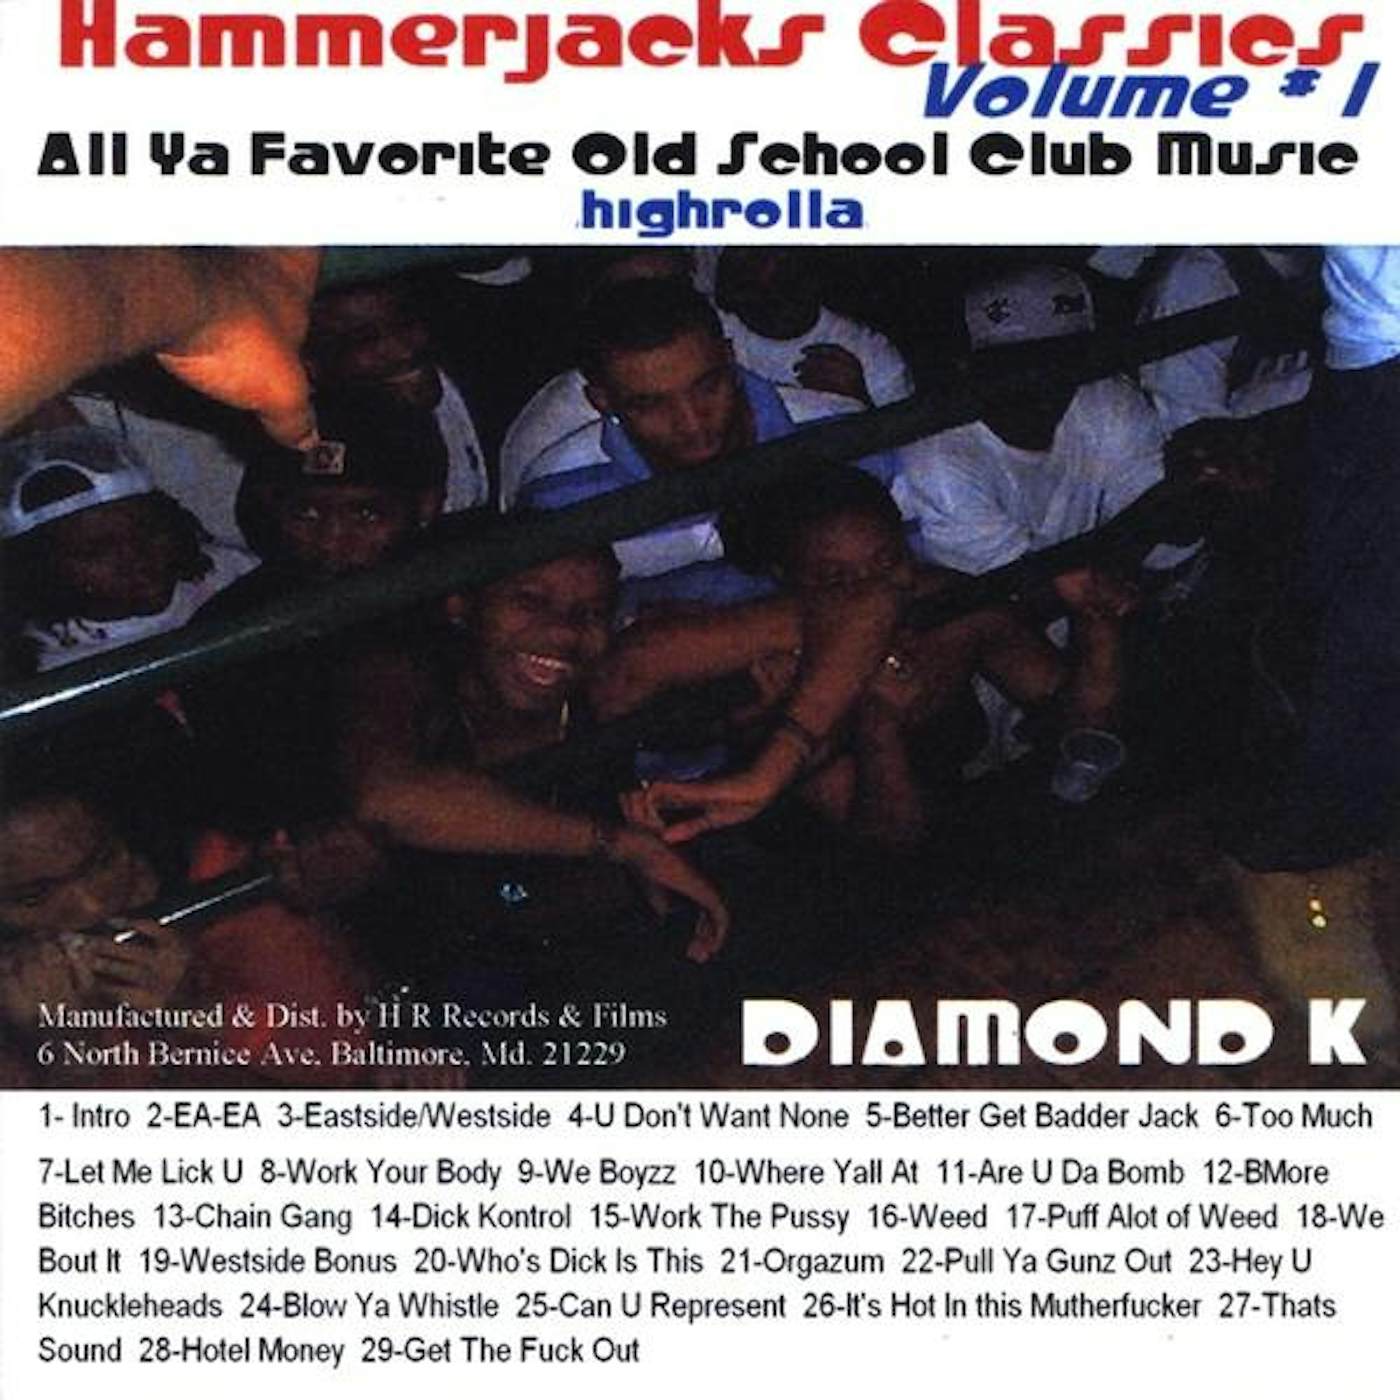 Diamond K HAMMERJACKS CLASSICS CD